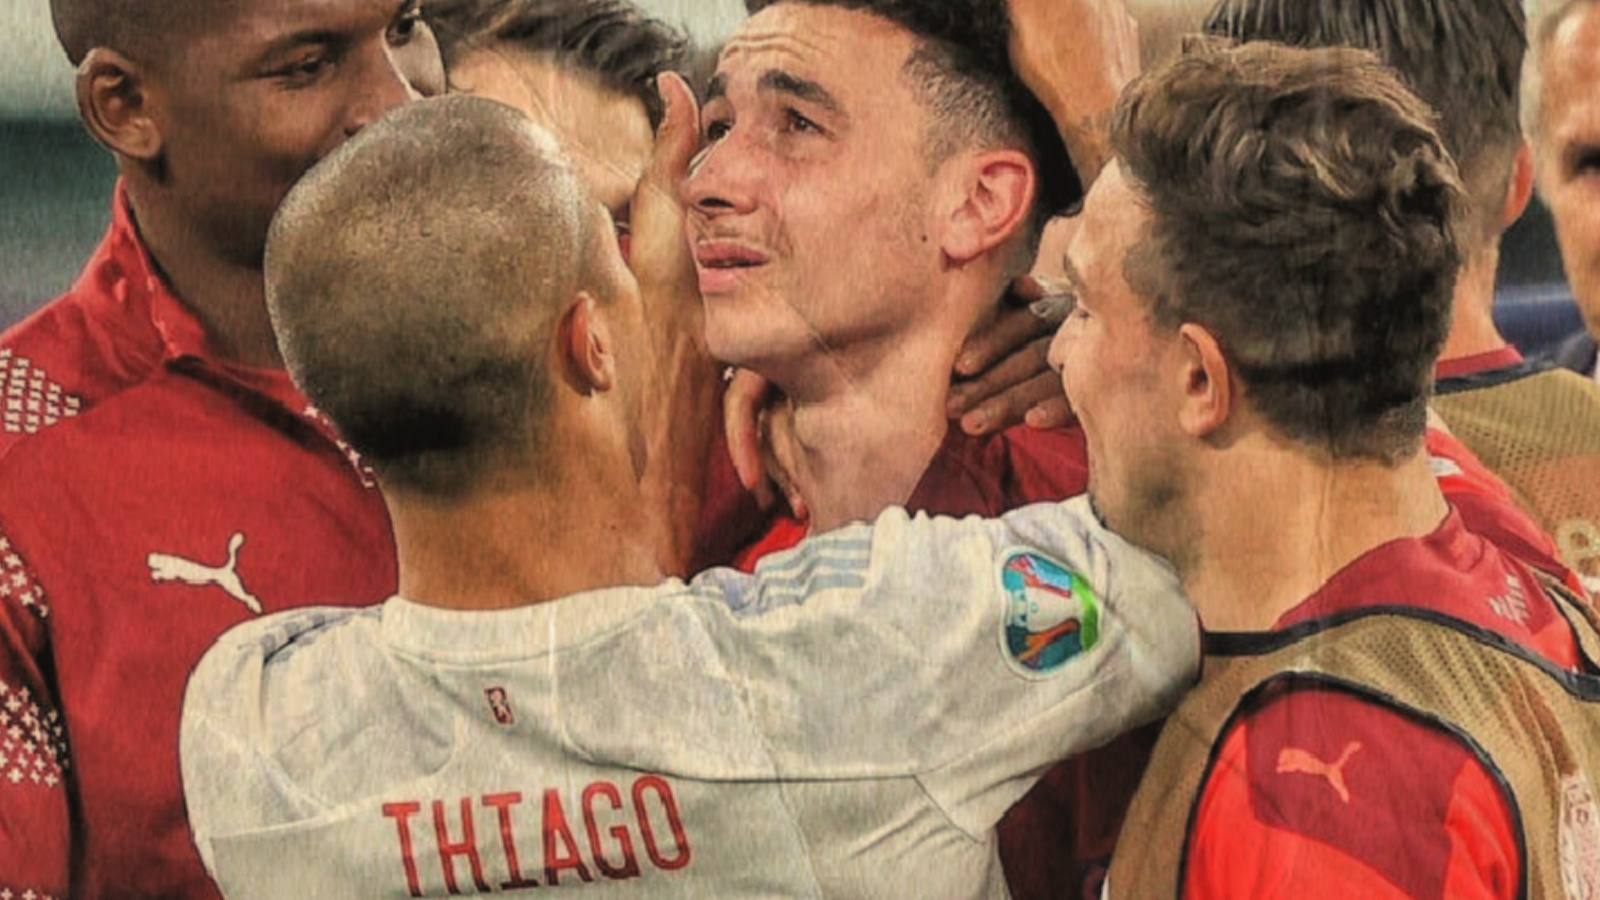 Watch: Thiago Alcantara consoles devastated opponent in classy gesture